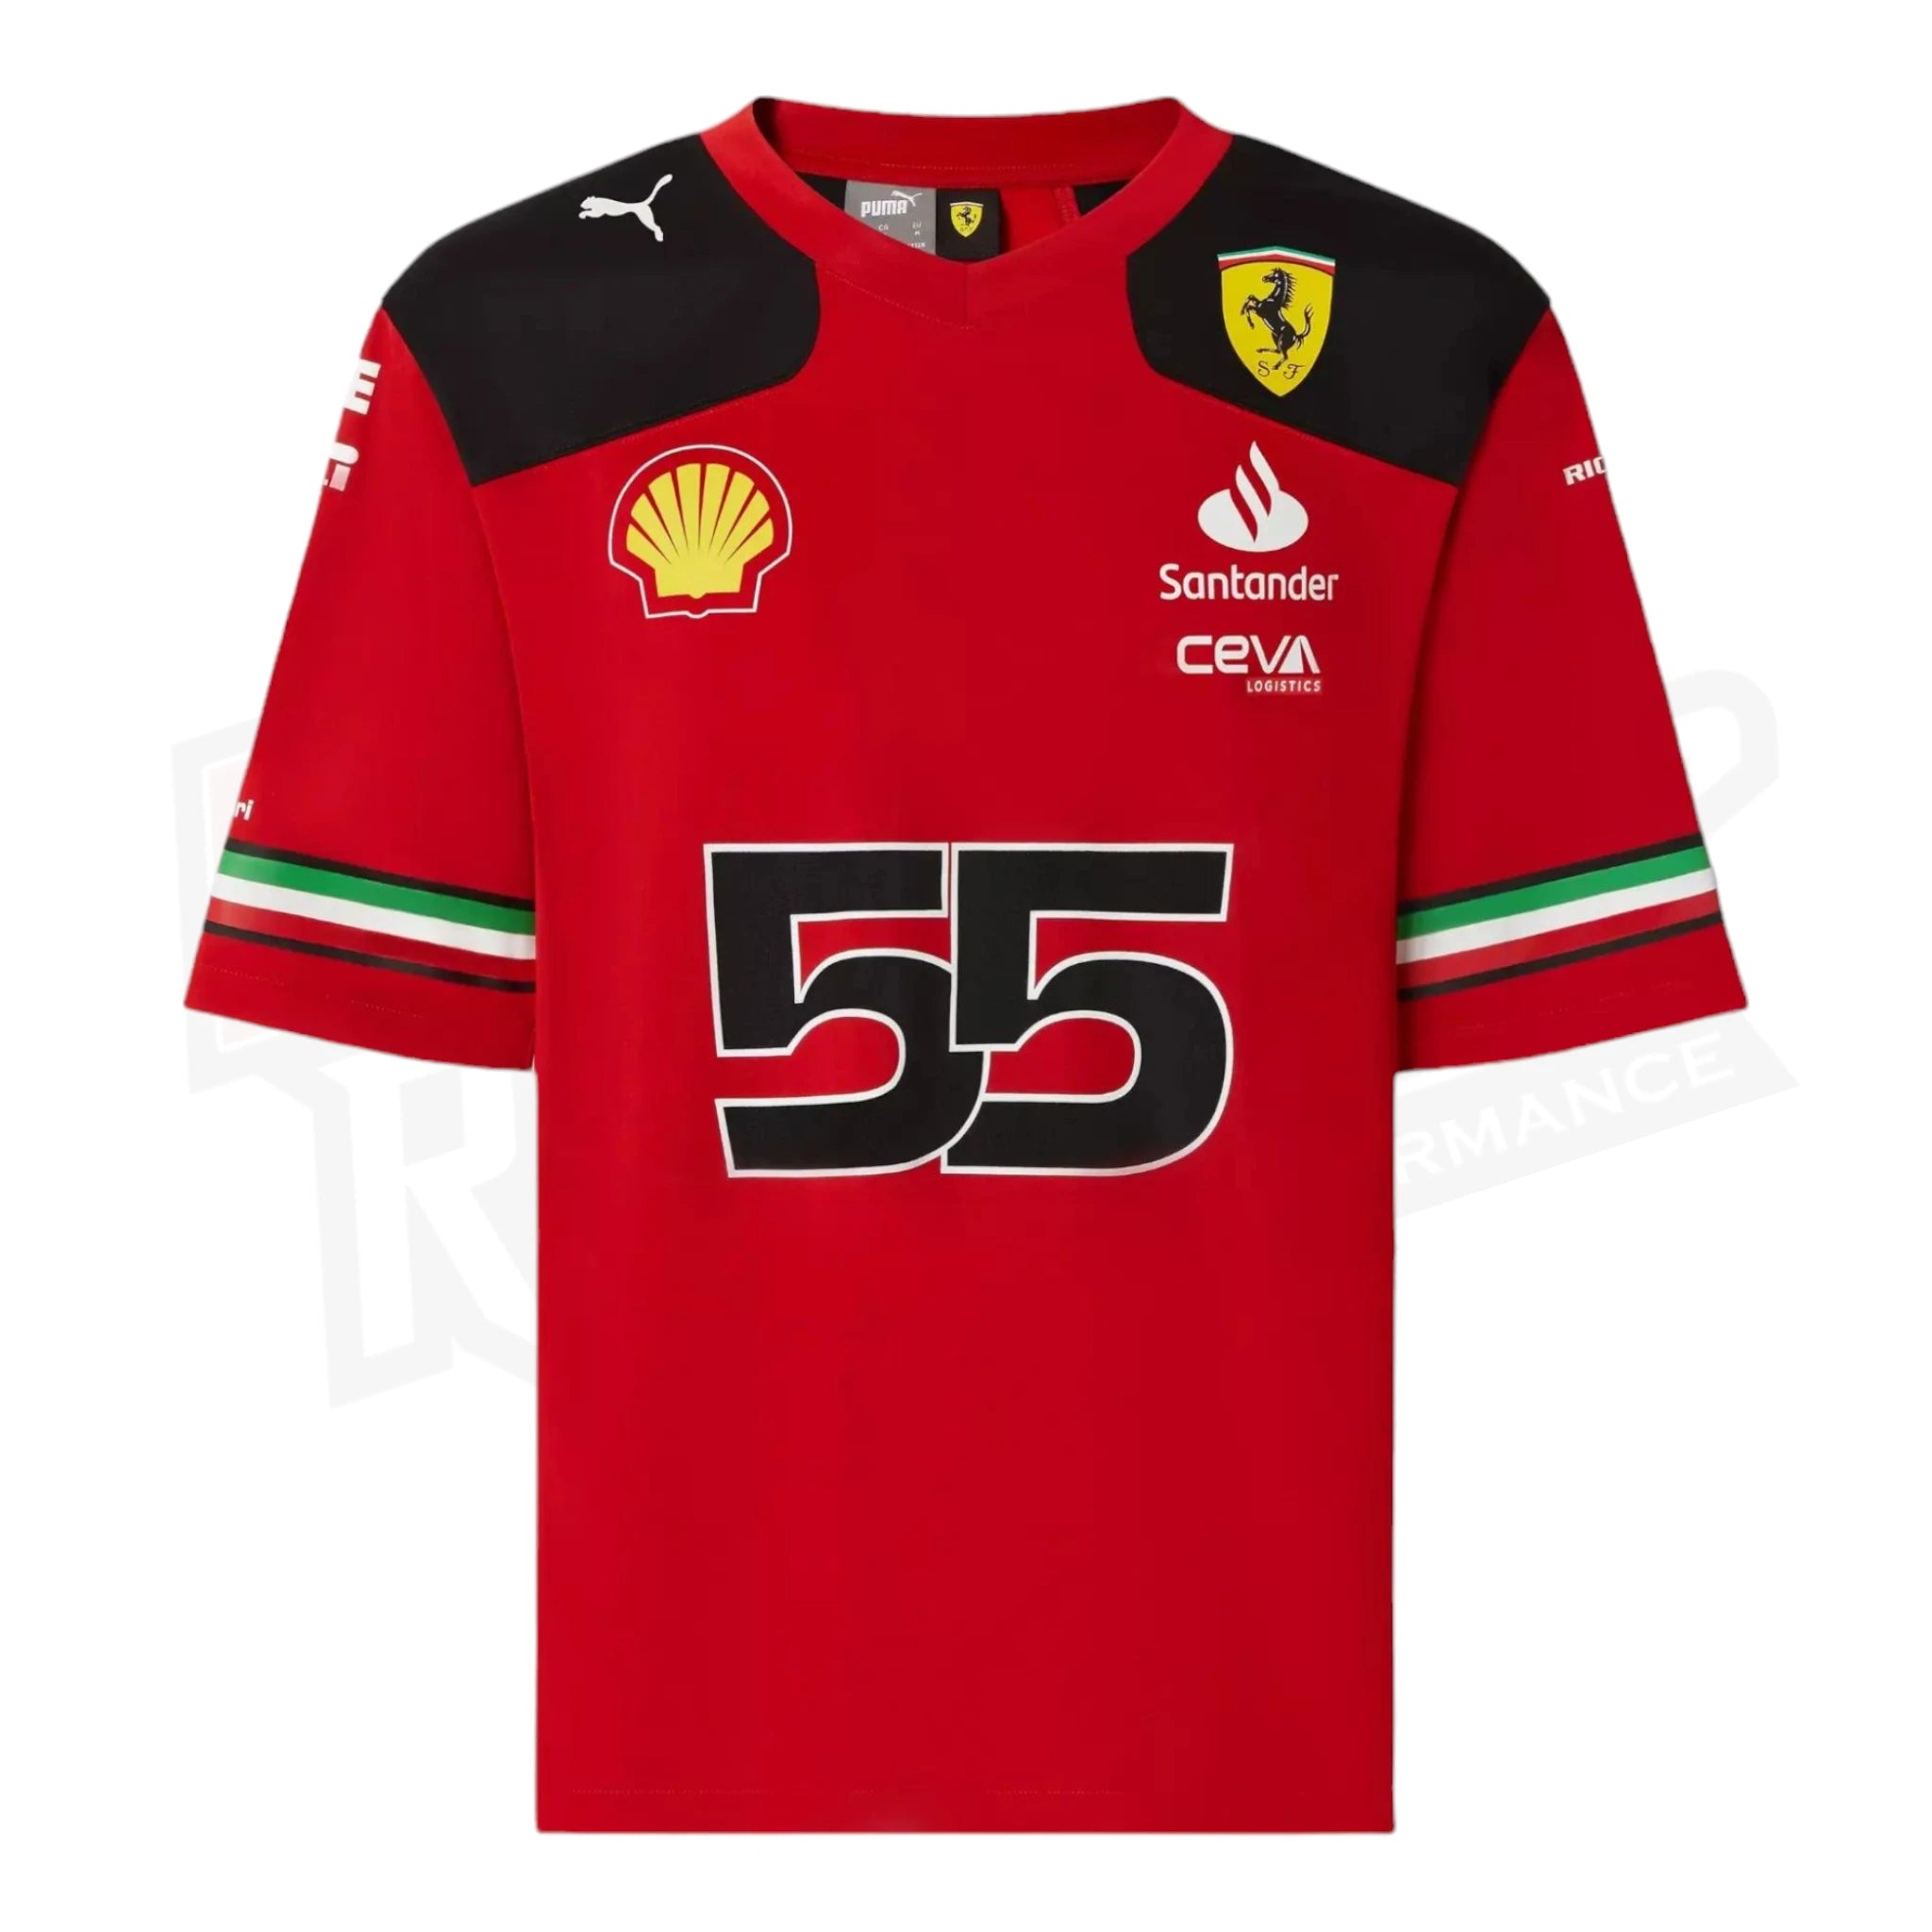 Scuderia Ferrari Replica Carlos Sainz American football jersey - Austin Special Edition